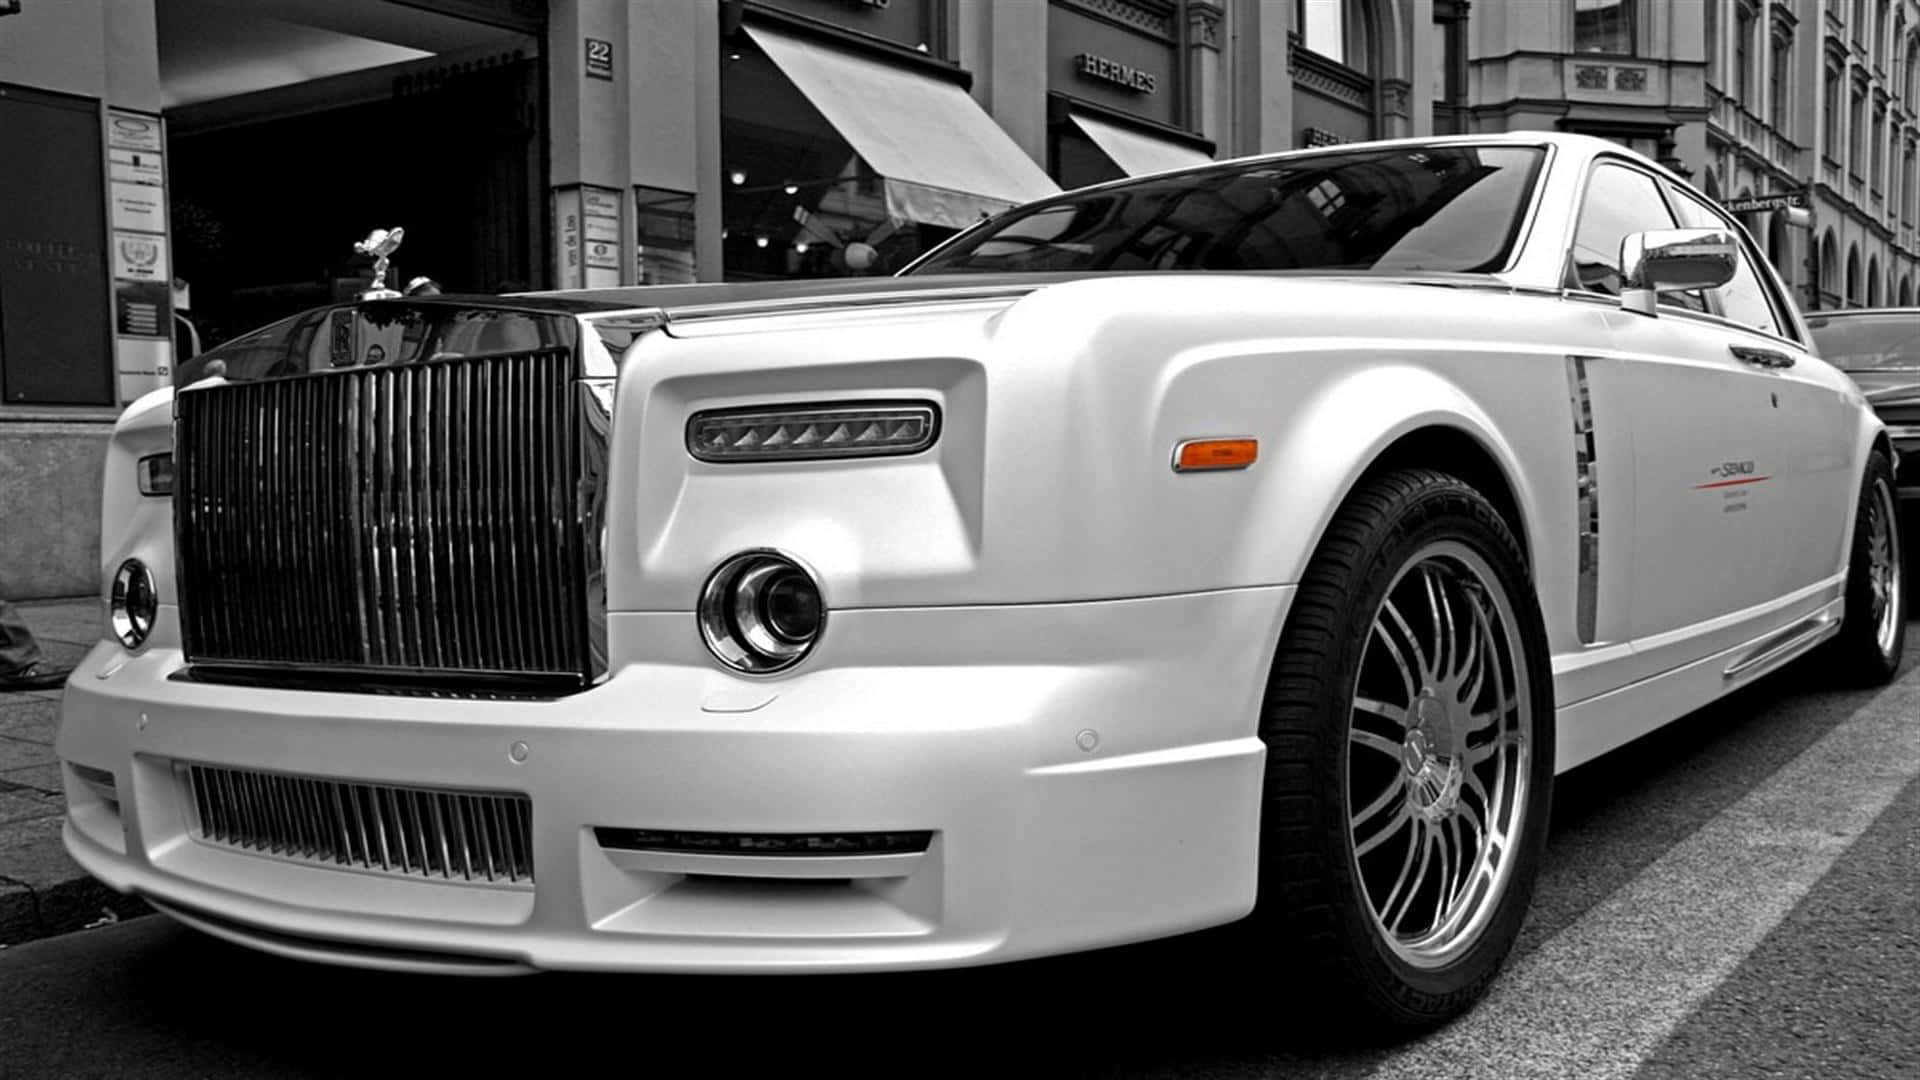 Rolls Royce Pictures